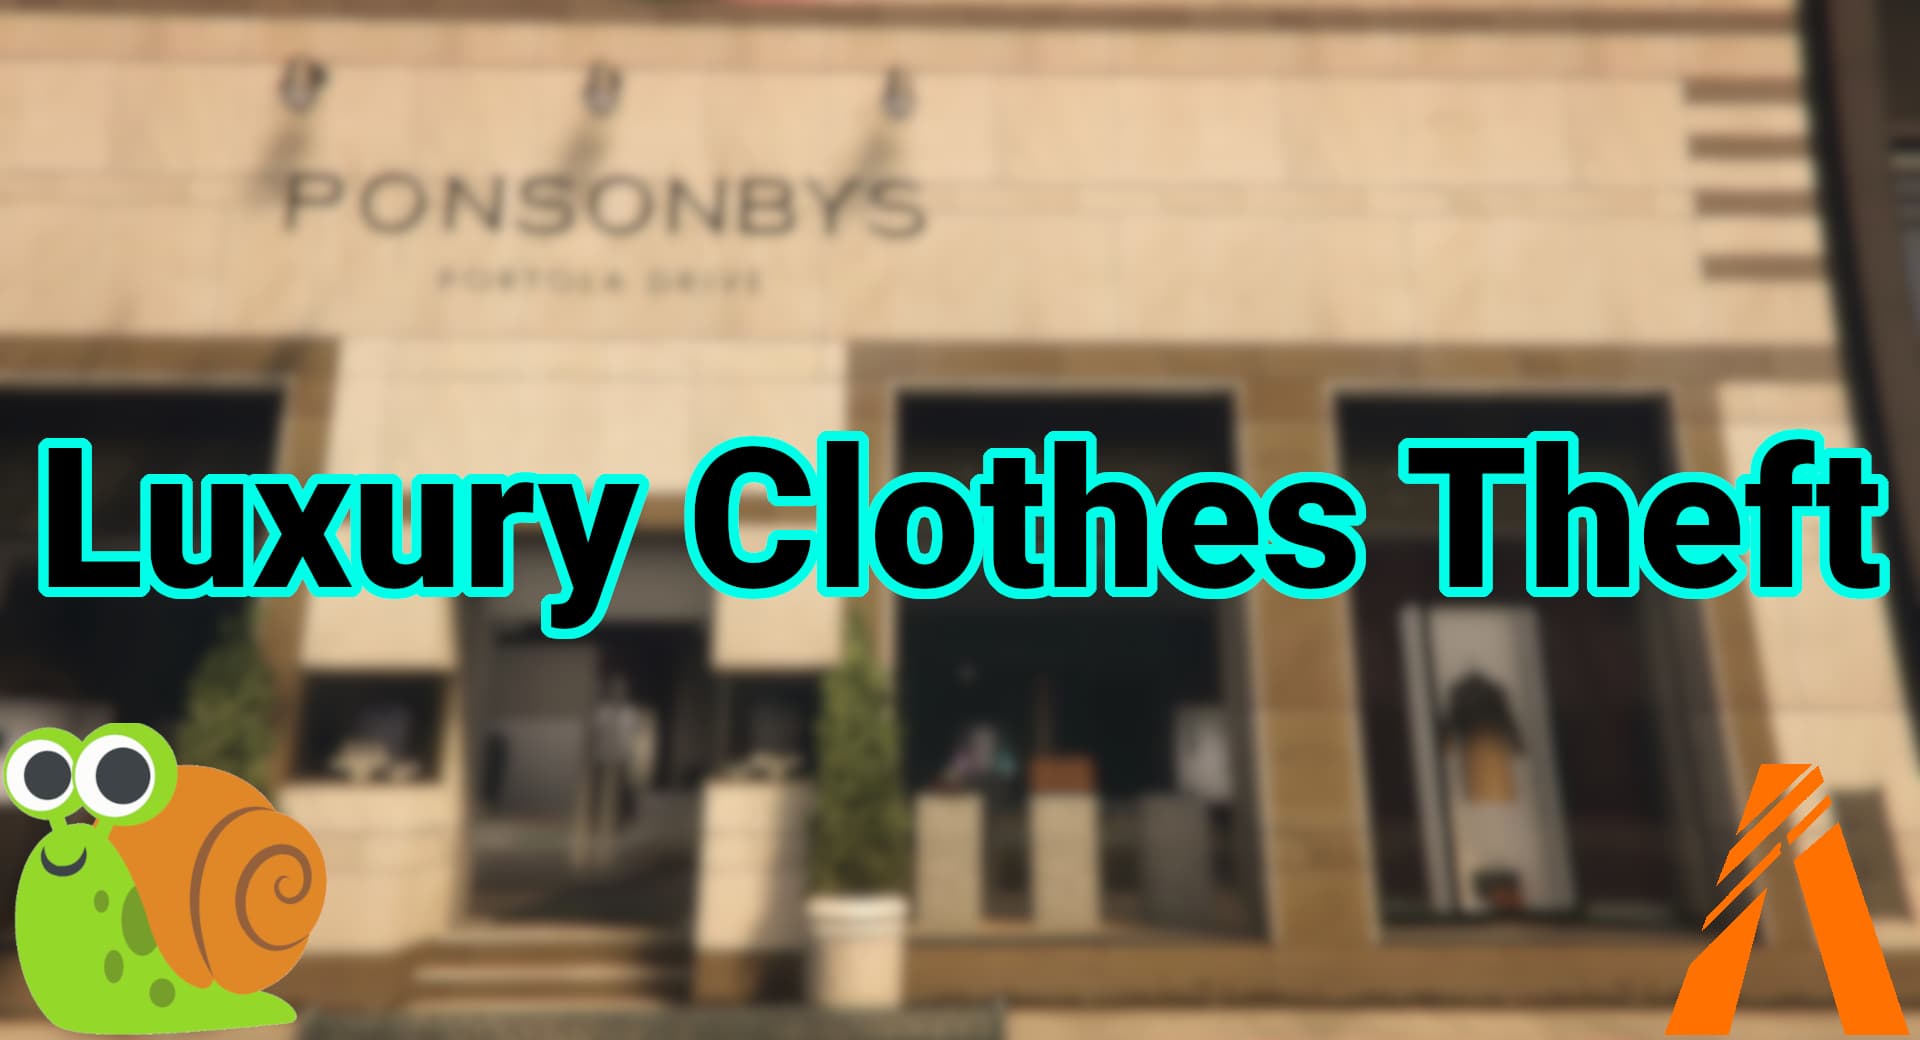 esx_luxury_clothes_theft